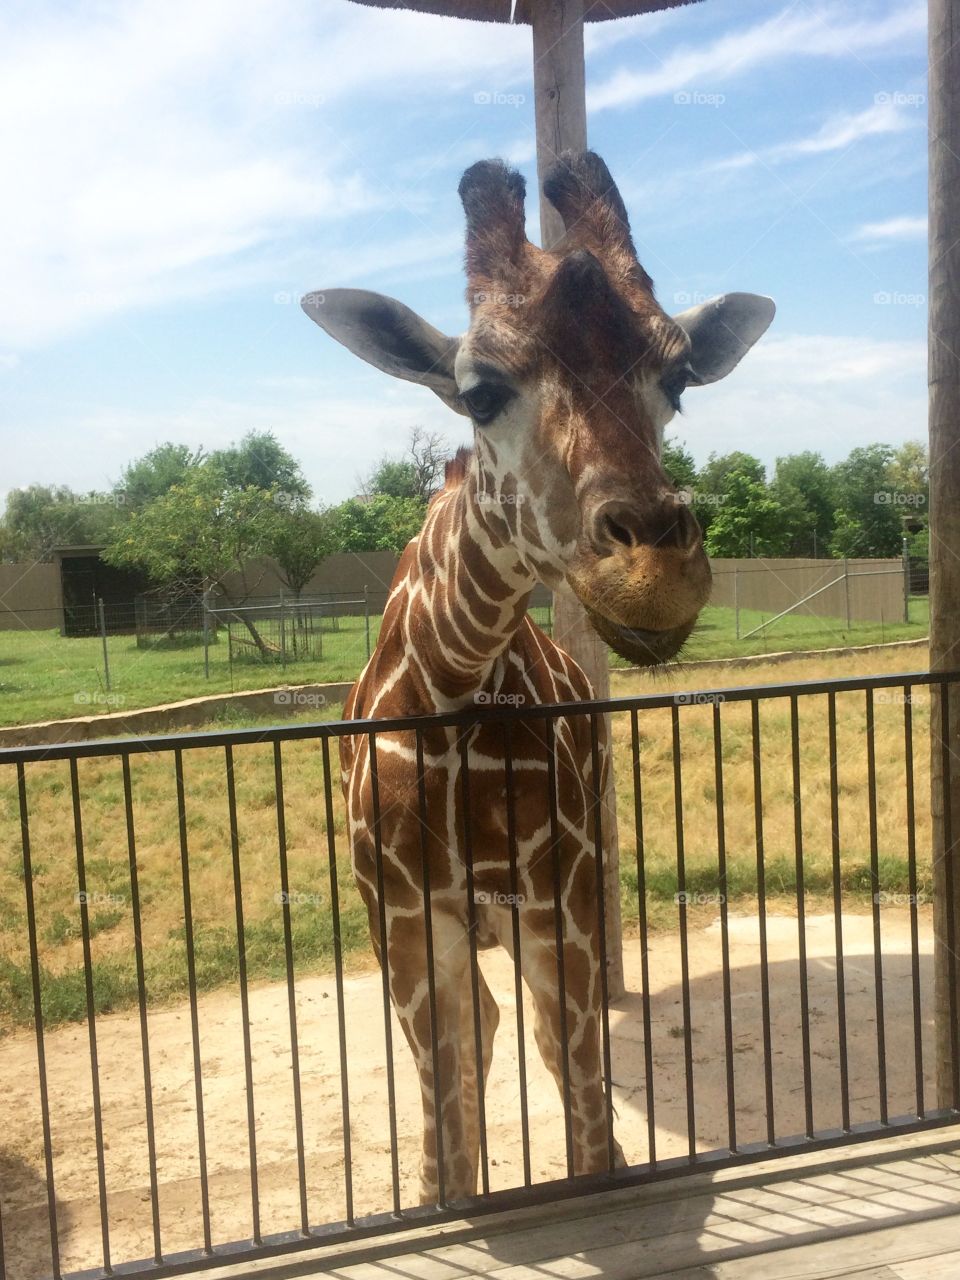 Friendly giraffe saying hello 